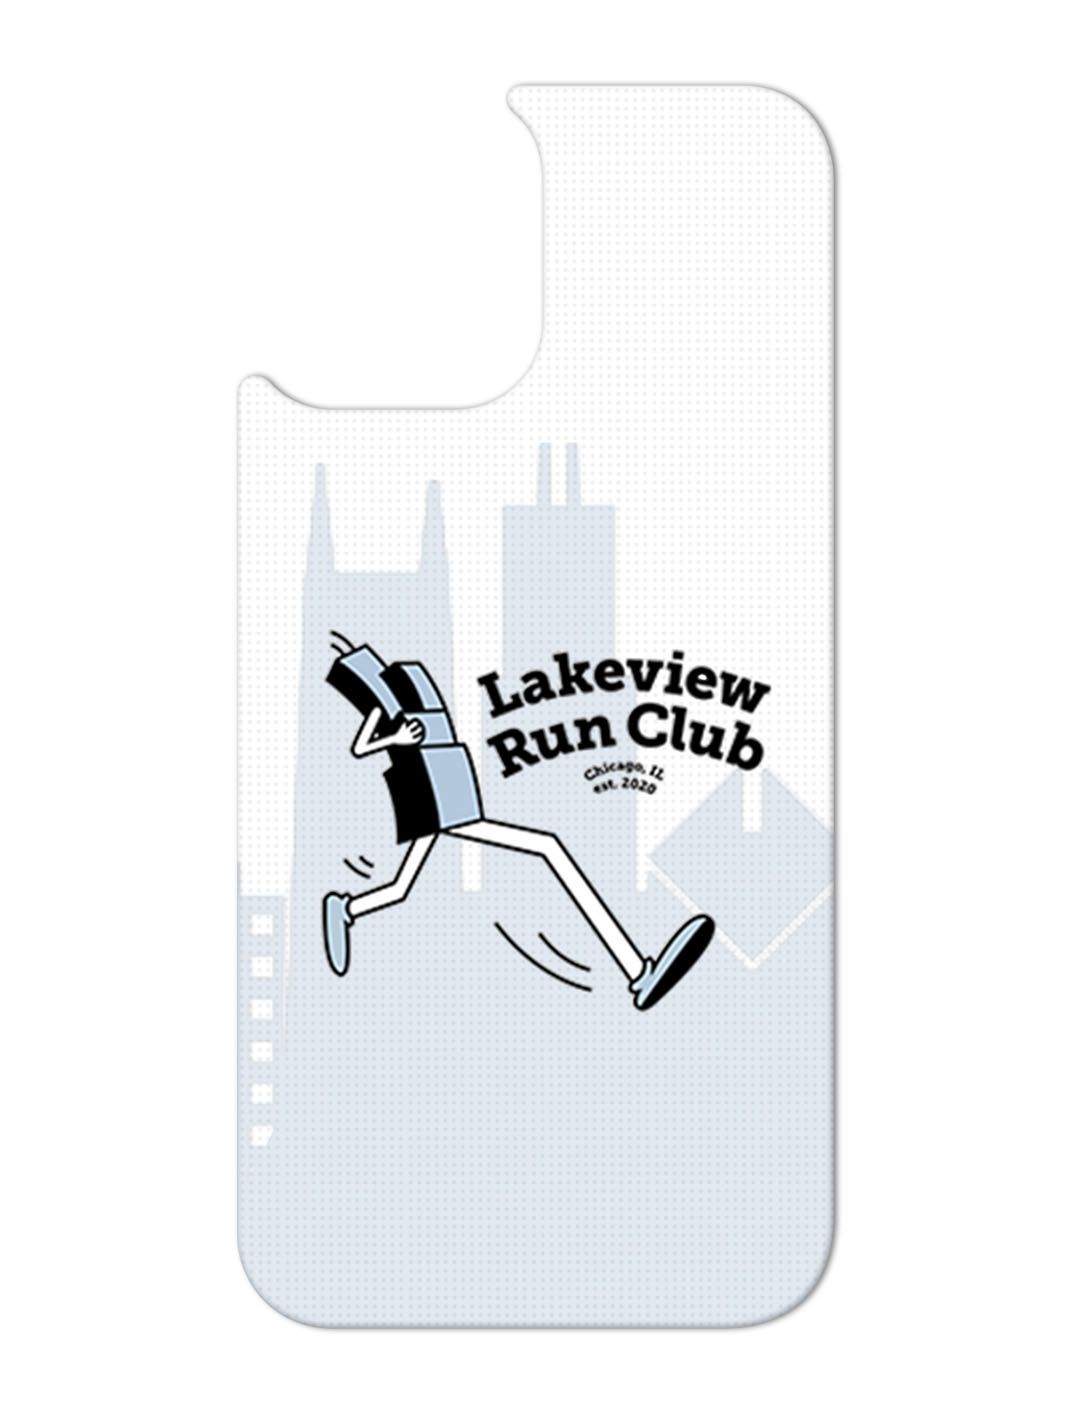 Phone Case Set - Lakeview Run Club 2